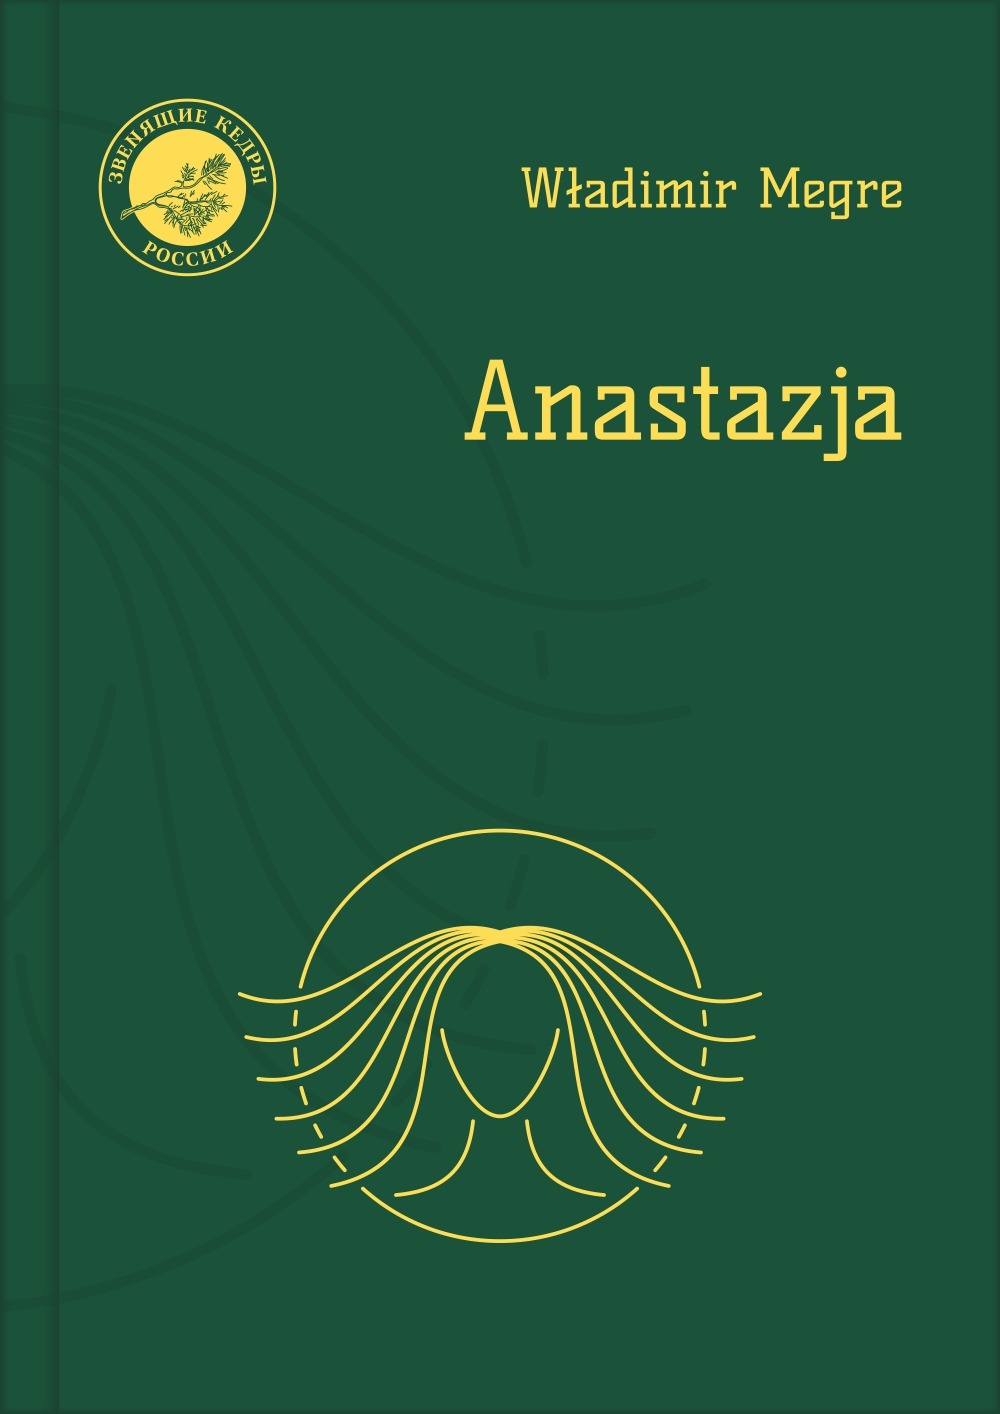 Volume 1 in Polish-Anastazja-Front-visualization.jpg